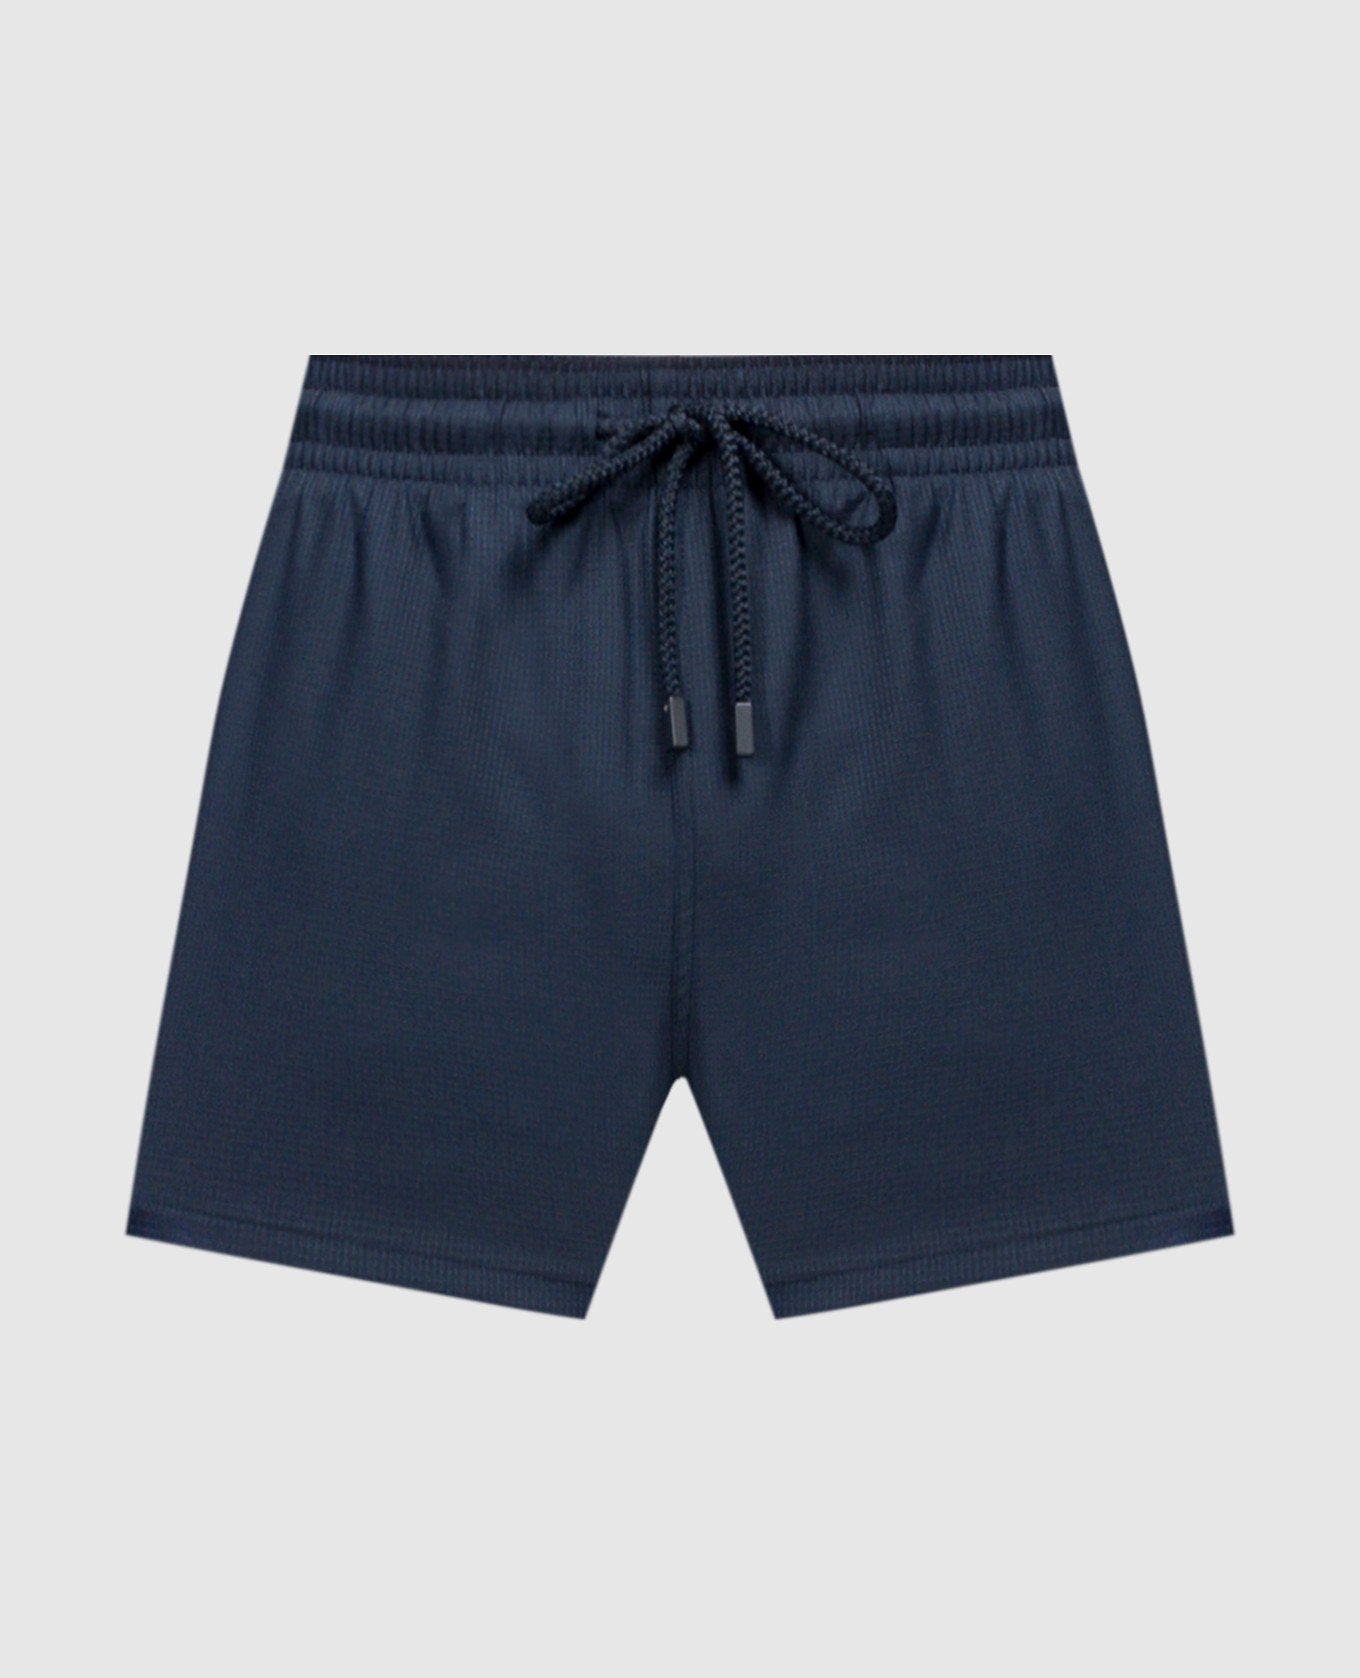 Blue Micro Carreaux swim shorts made of wool